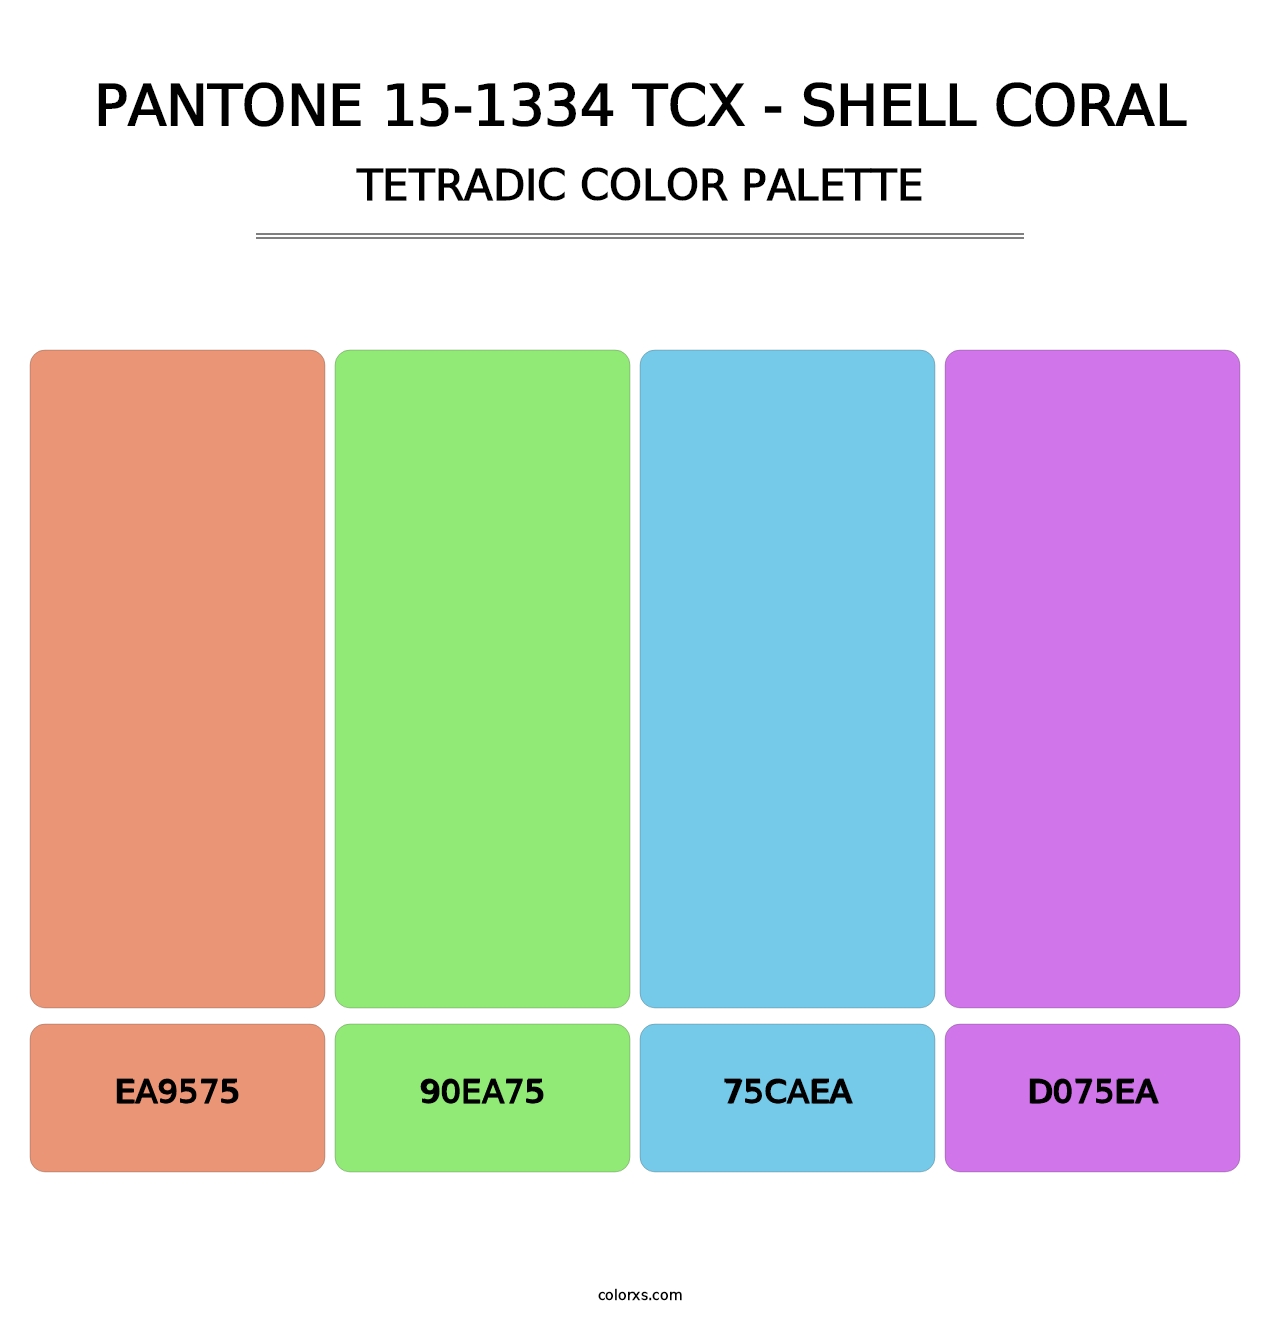 PANTONE 15-1334 TCX - Shell Coral - Tetradic Color Palette